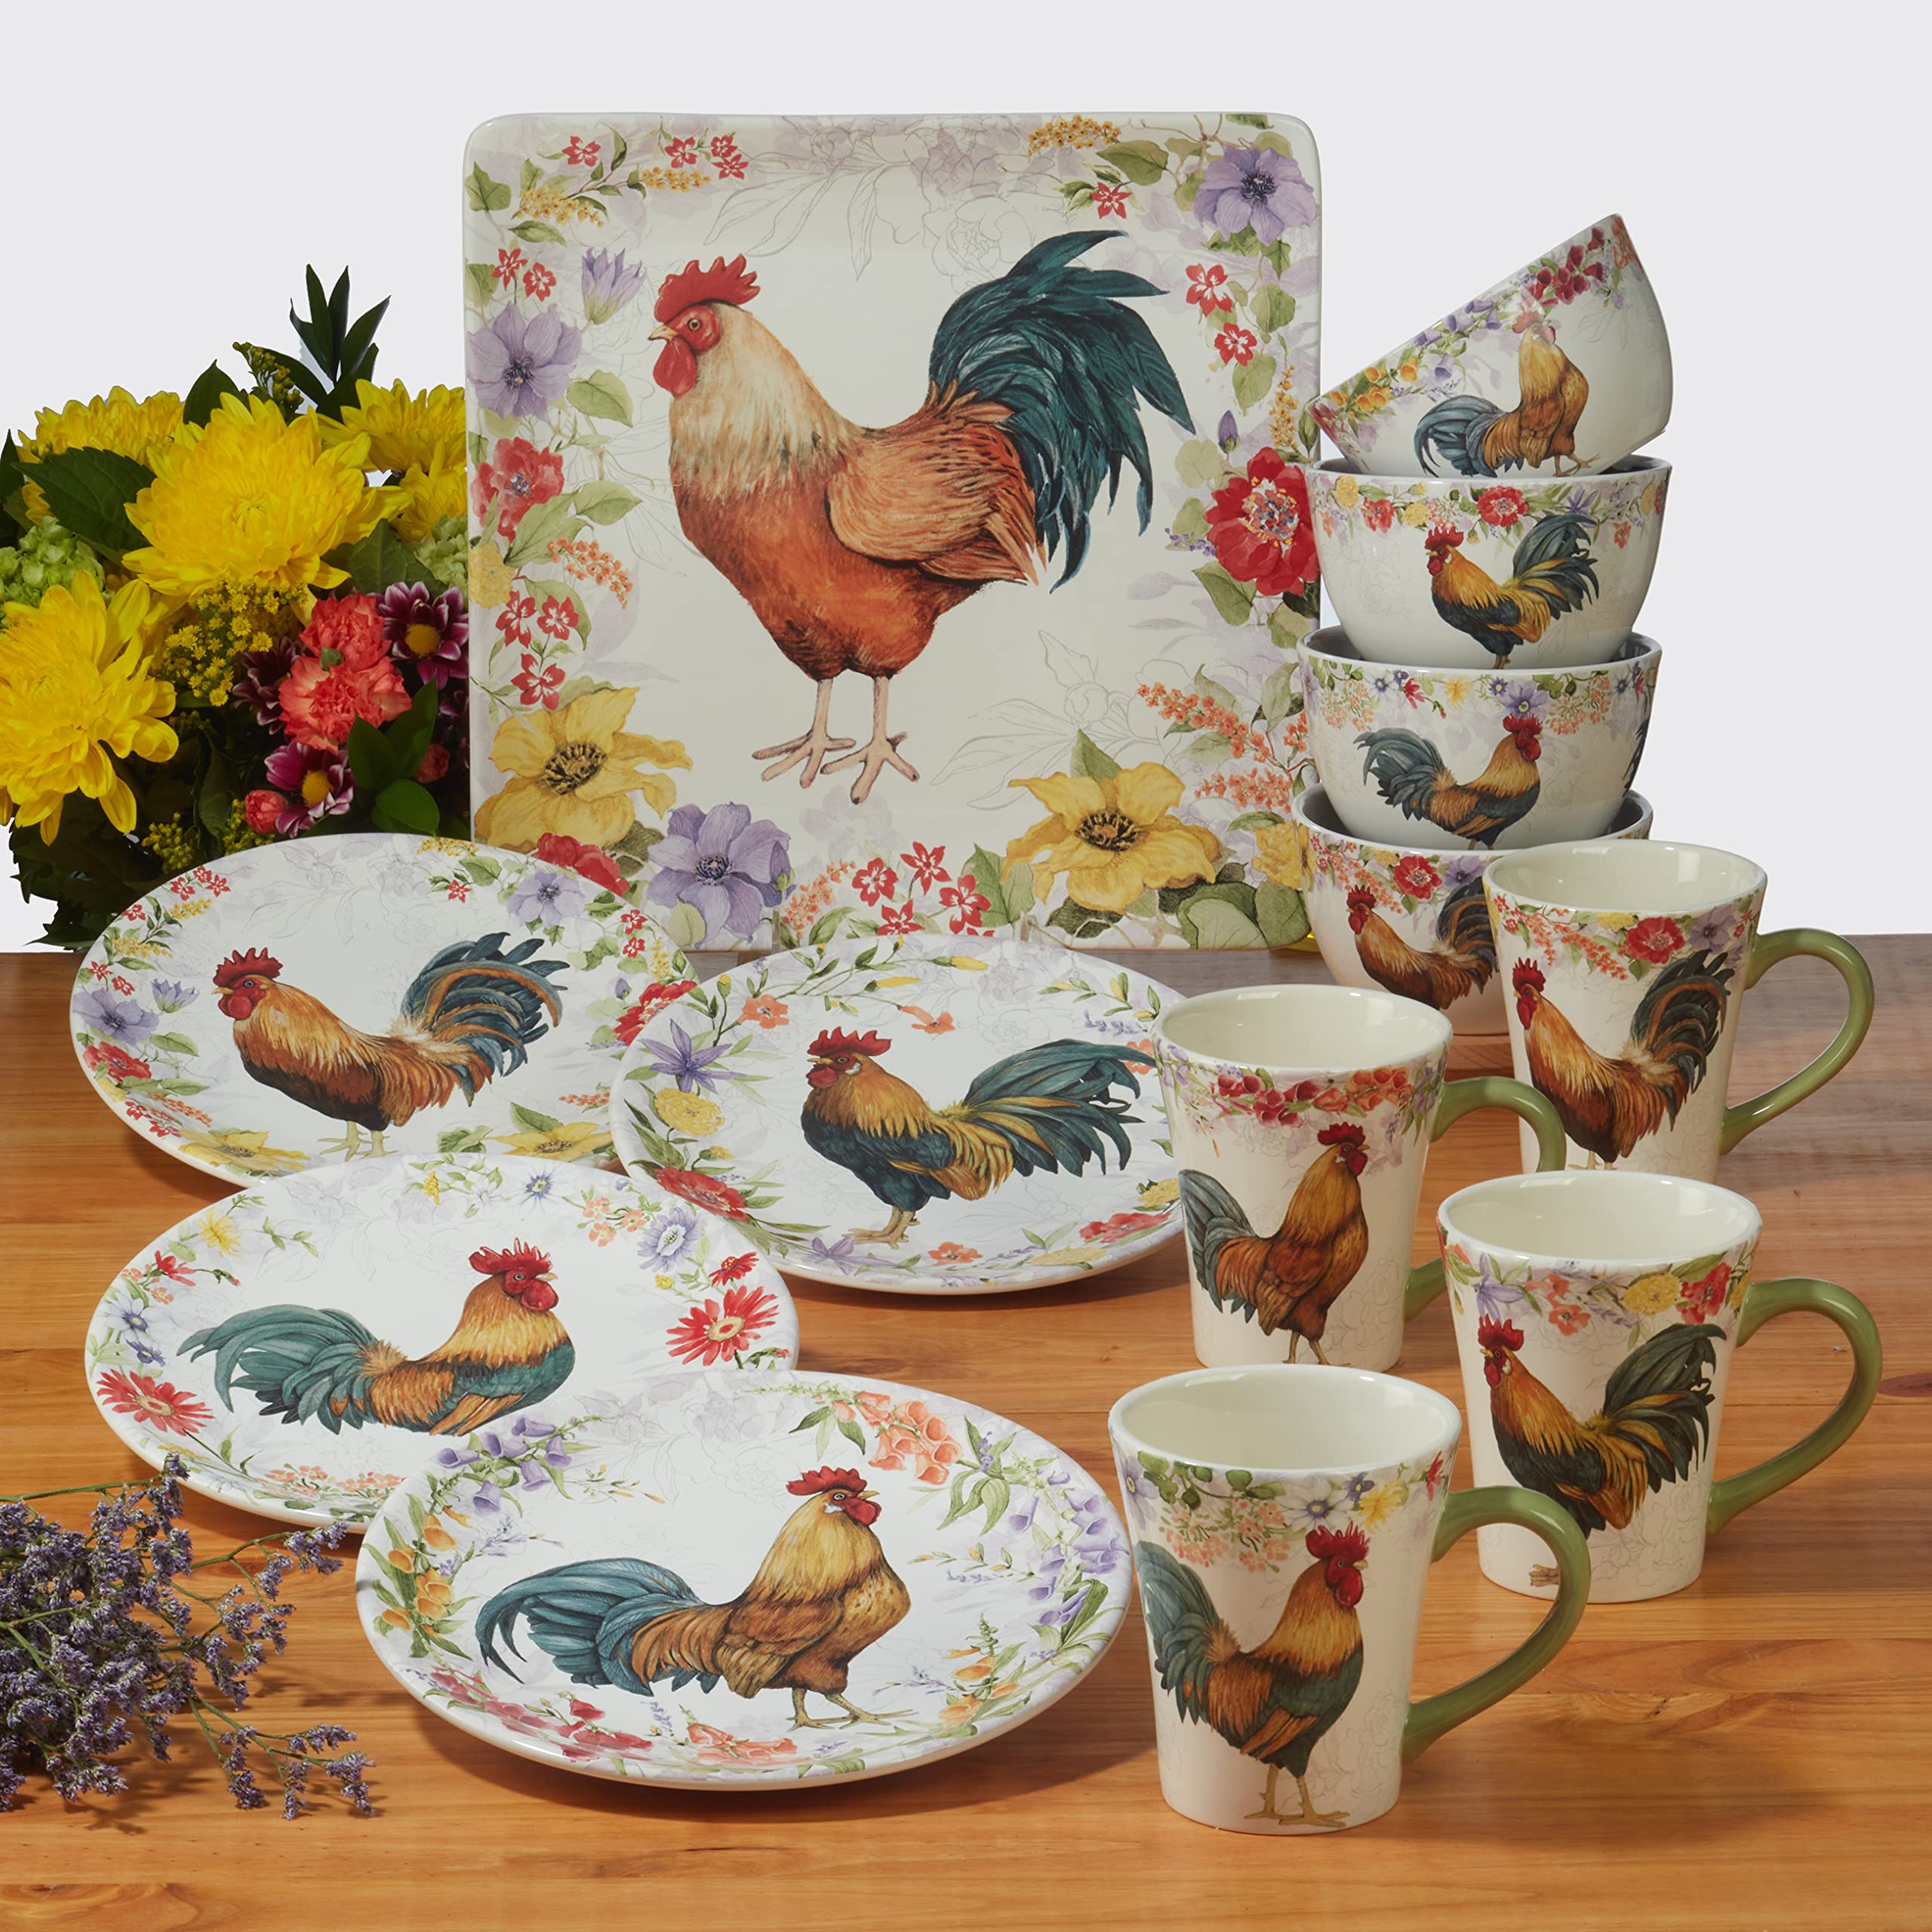 Certified International Floral Rooster 38 oz. Soup/Pasta Bowls, Set of 4 Assorted Designs, Multicolor